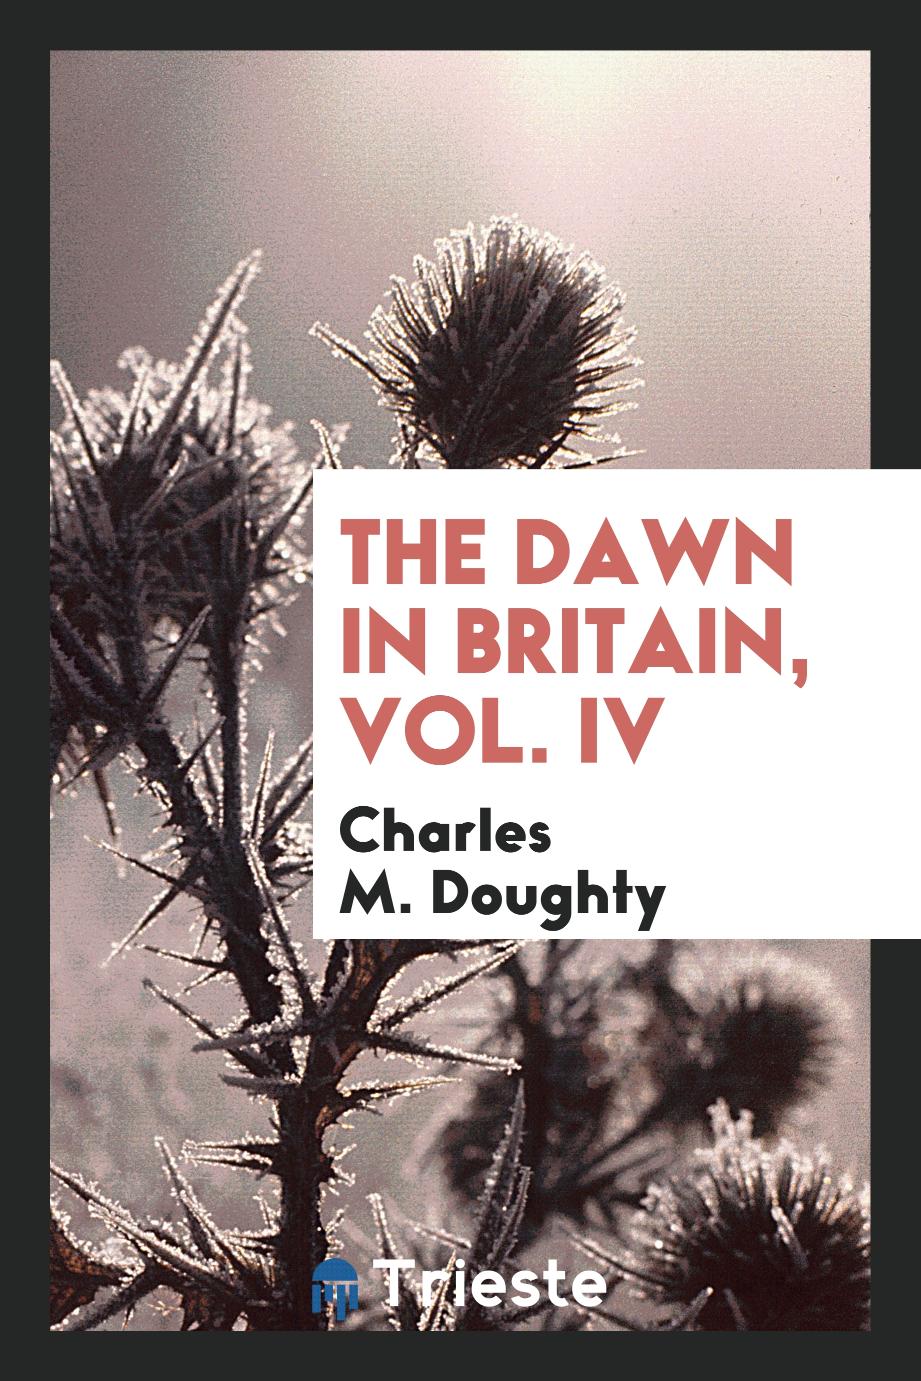 The dawn in Britain, Vol. IV